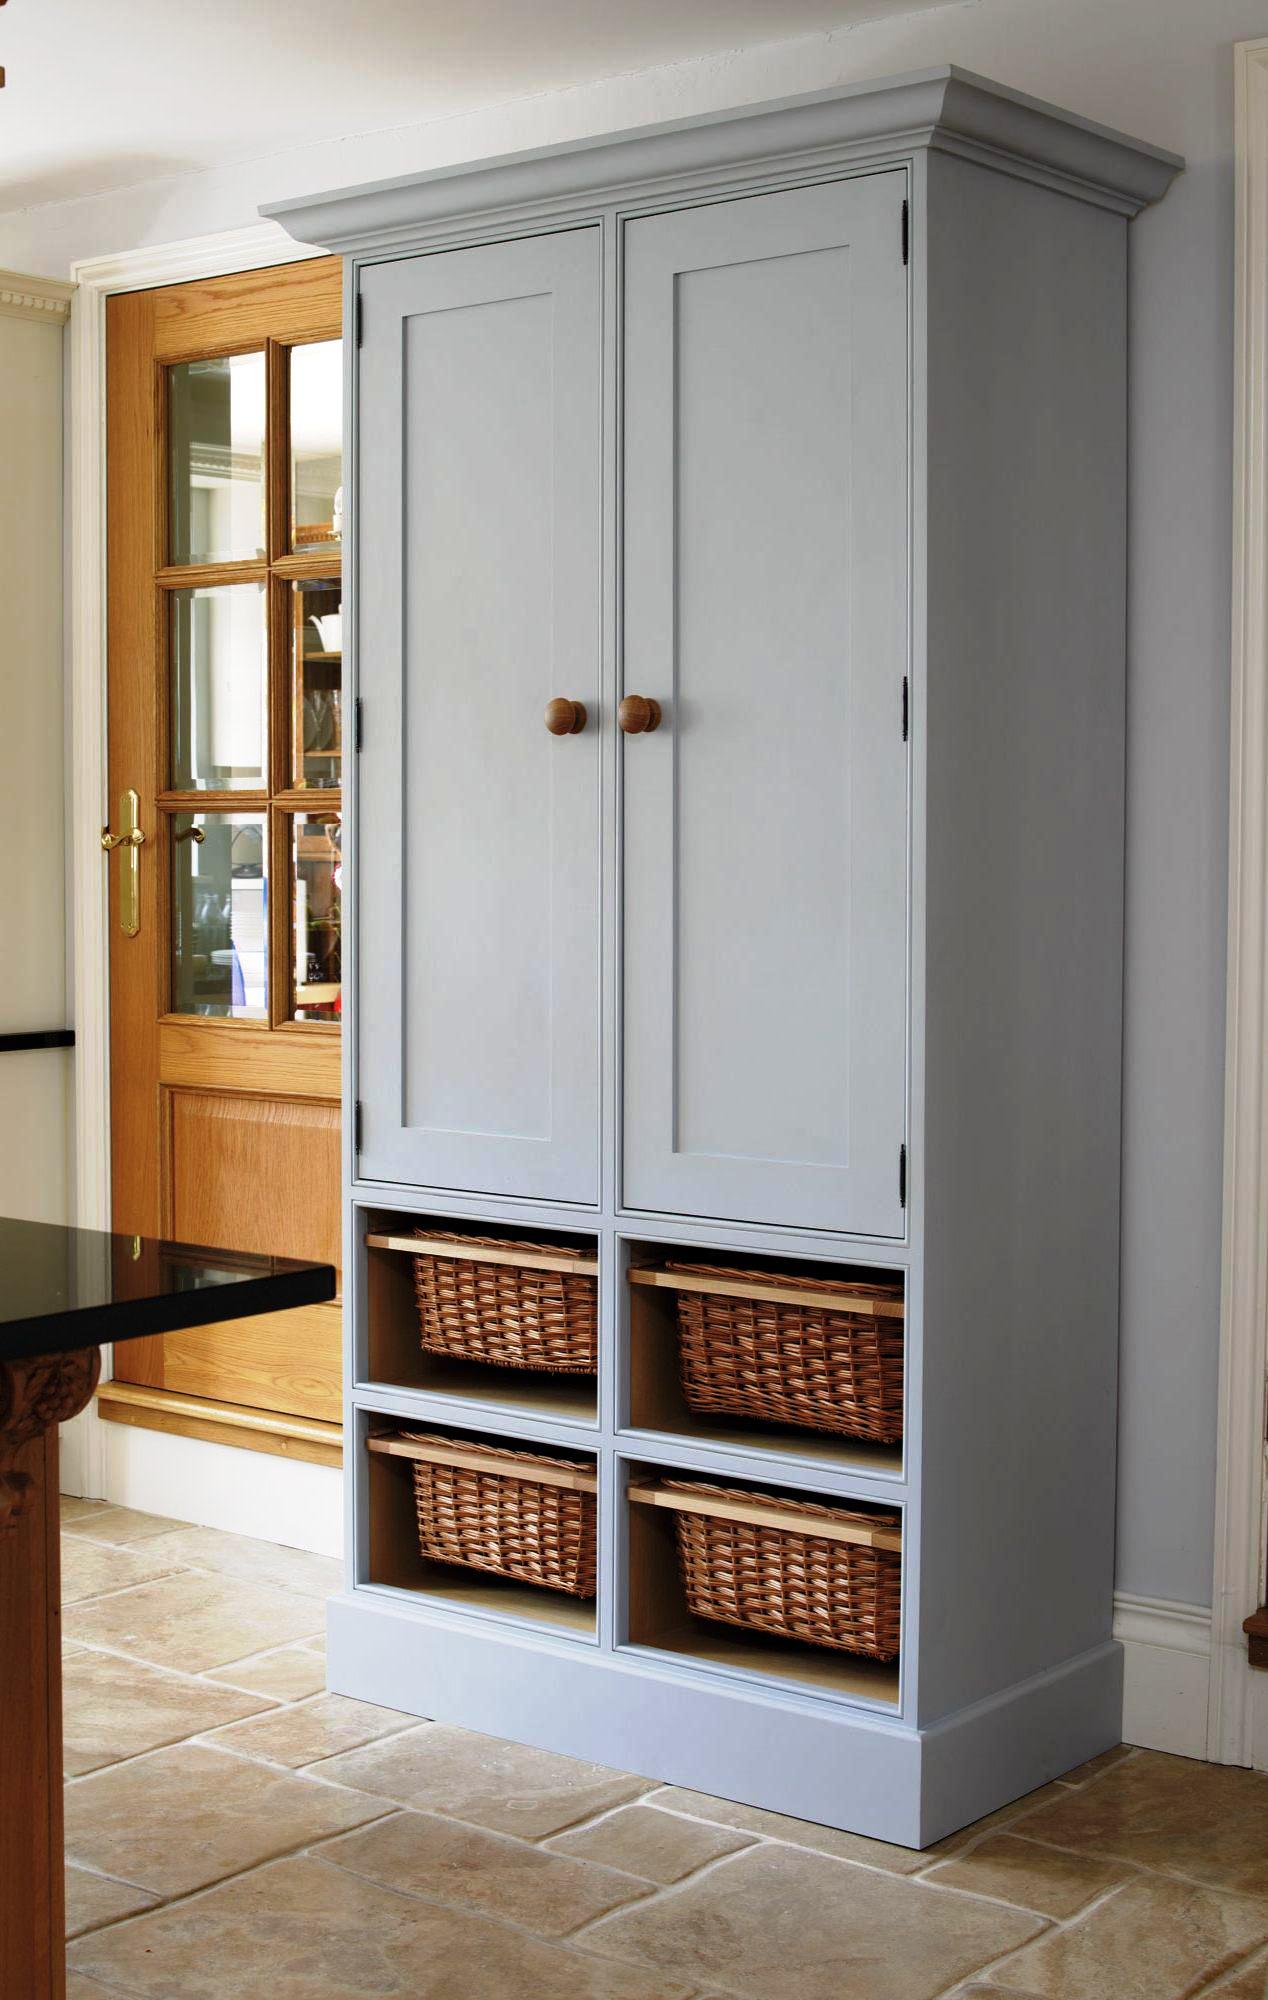  kitchen pantry cabinet freestanding